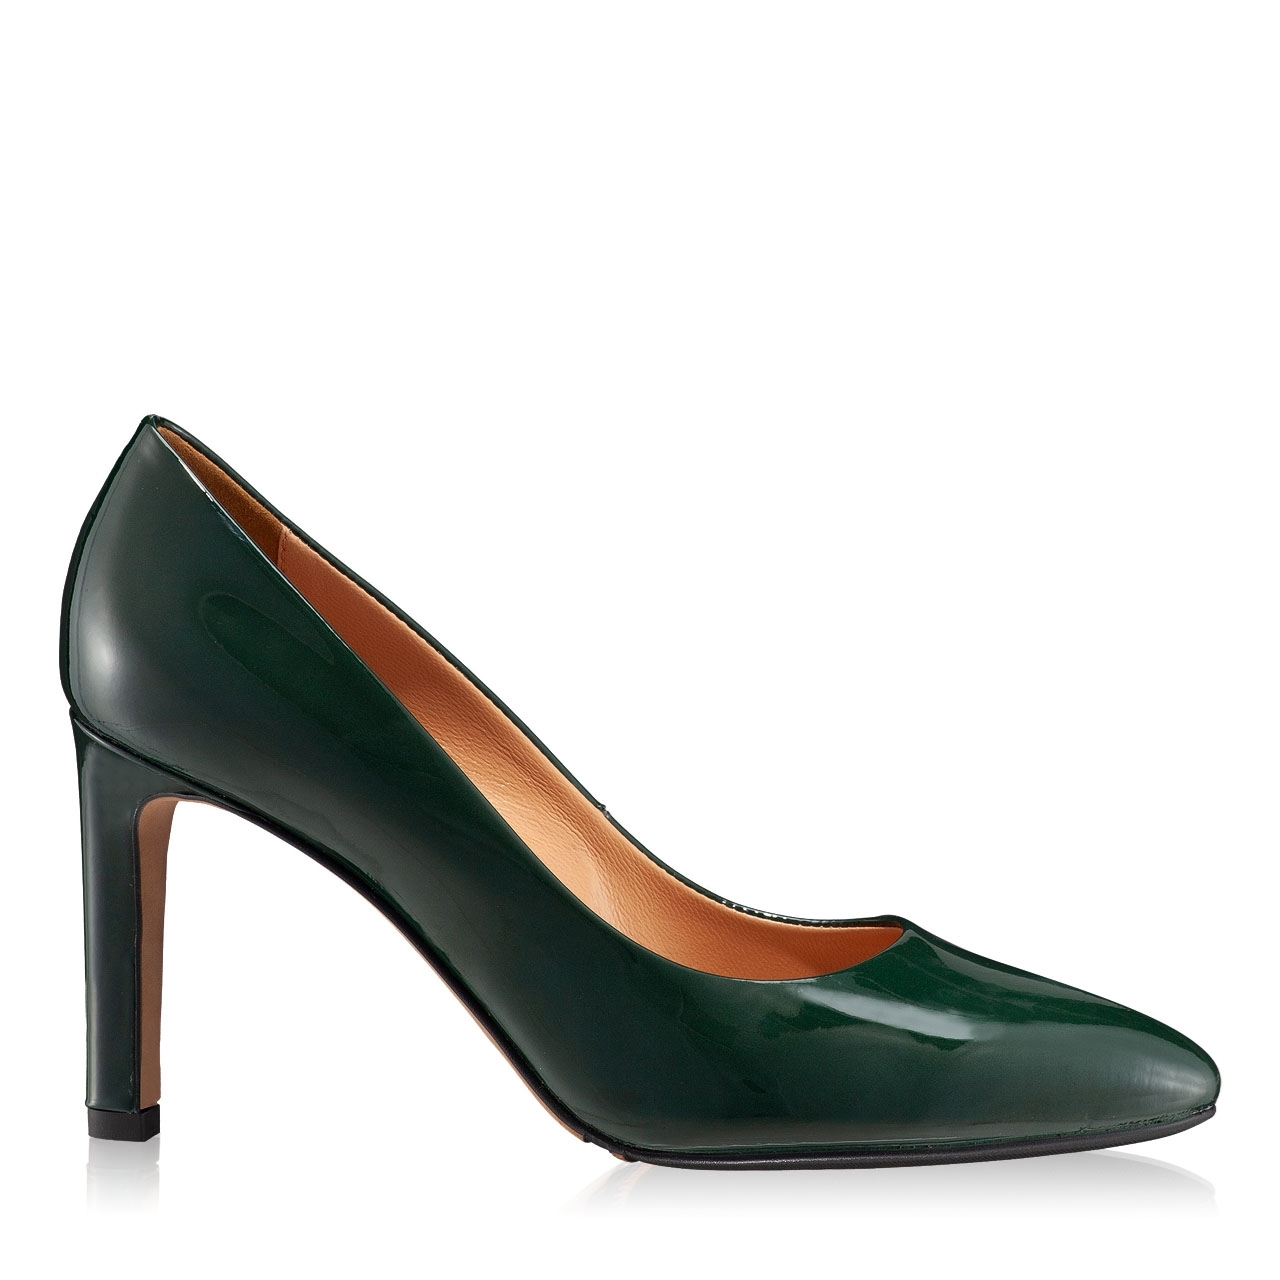 Imagine Pantofi Eleganti Dama 5613 Vernice Verde